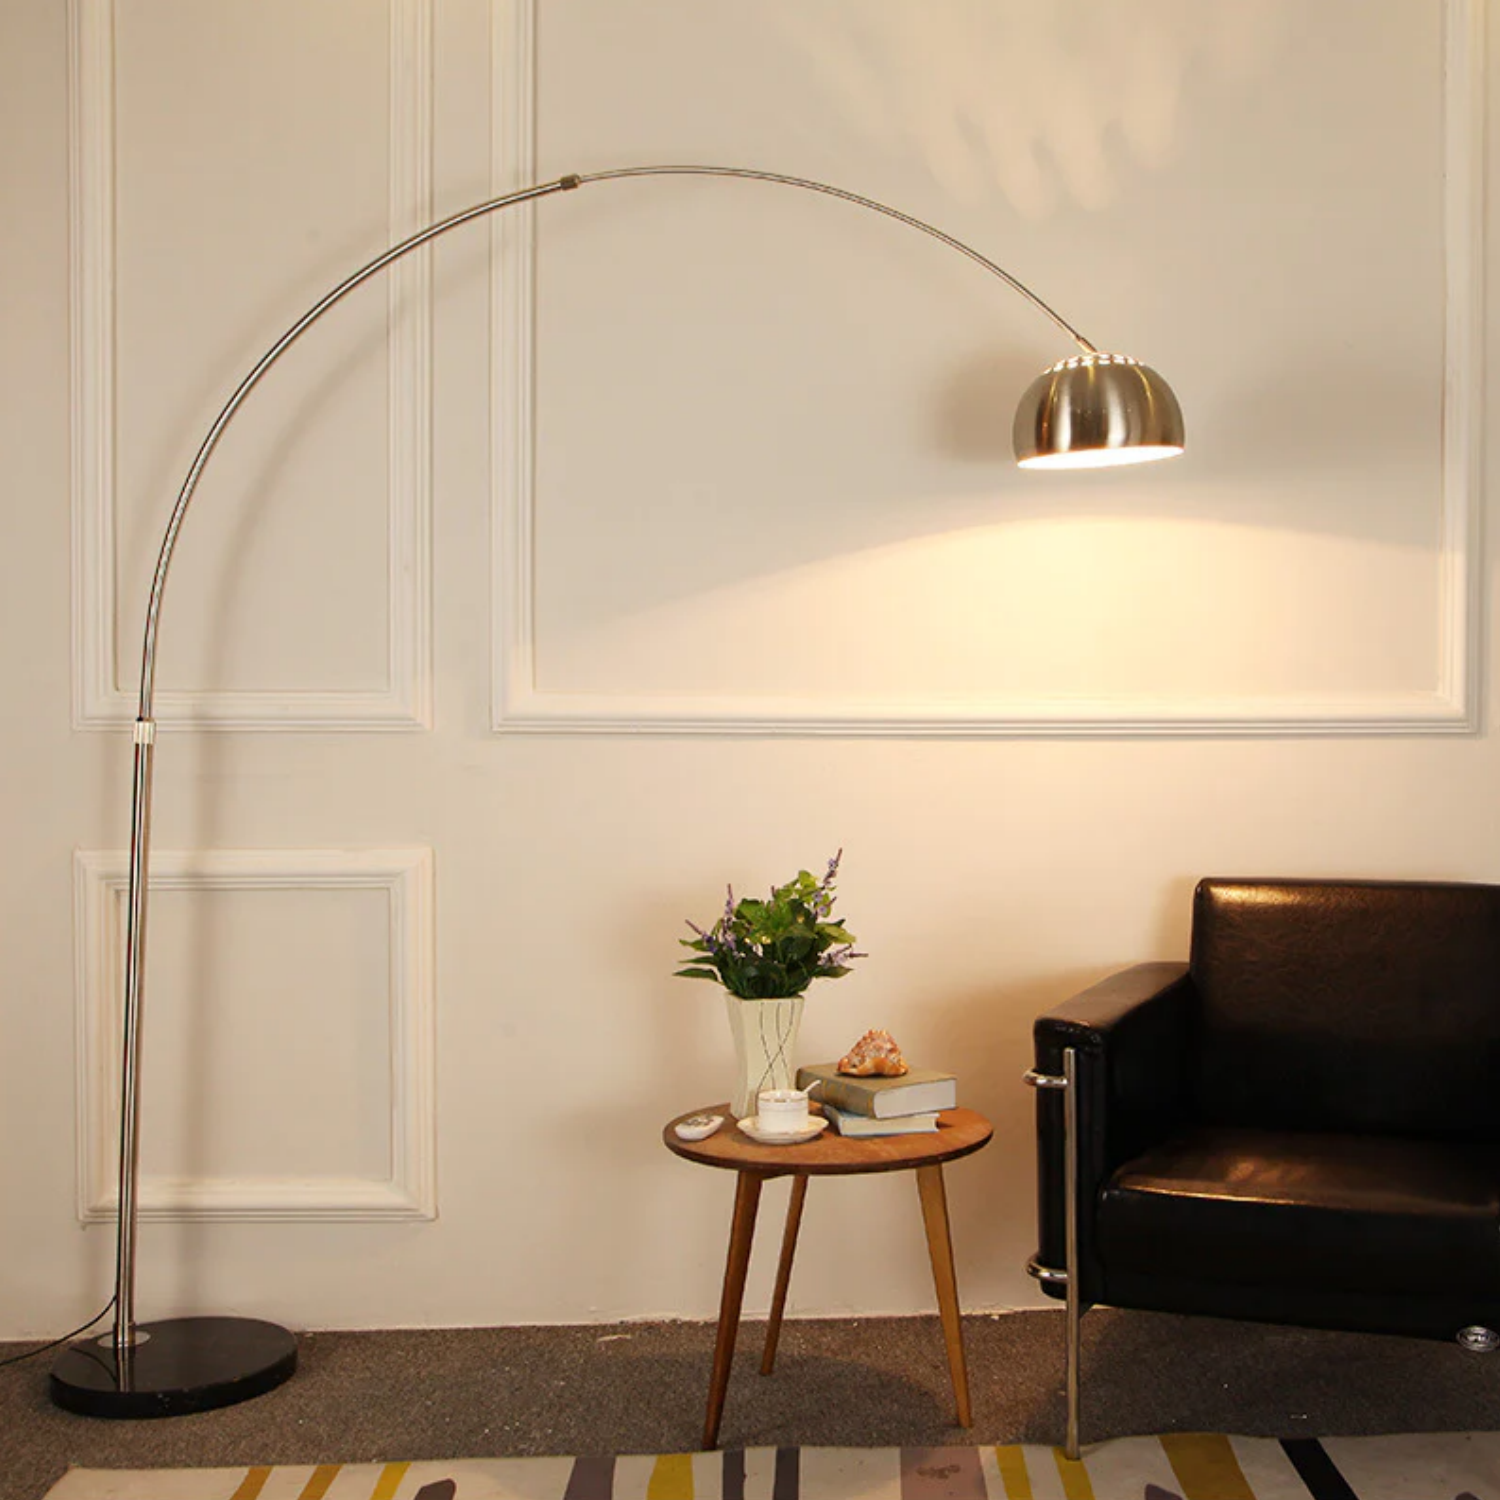 Decorative lights Floor lamp OL-FL046 Smart Home life interior